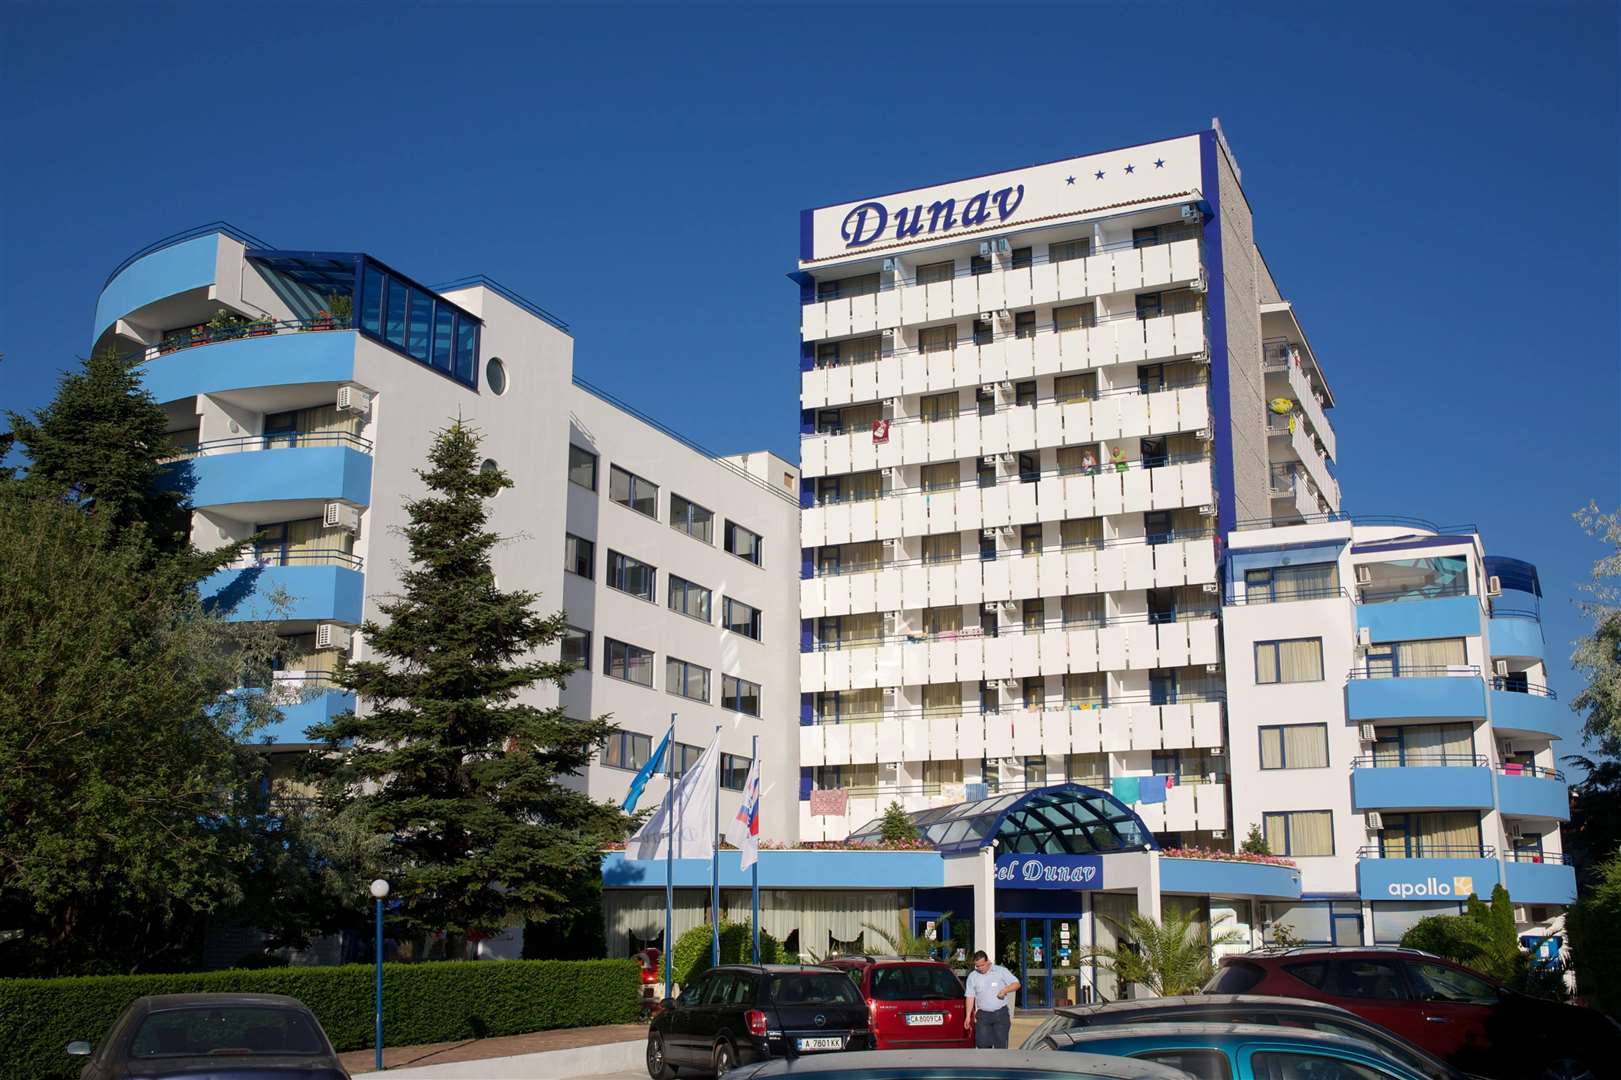 Hotel Dunav, Sunny Beach, Bulgaria